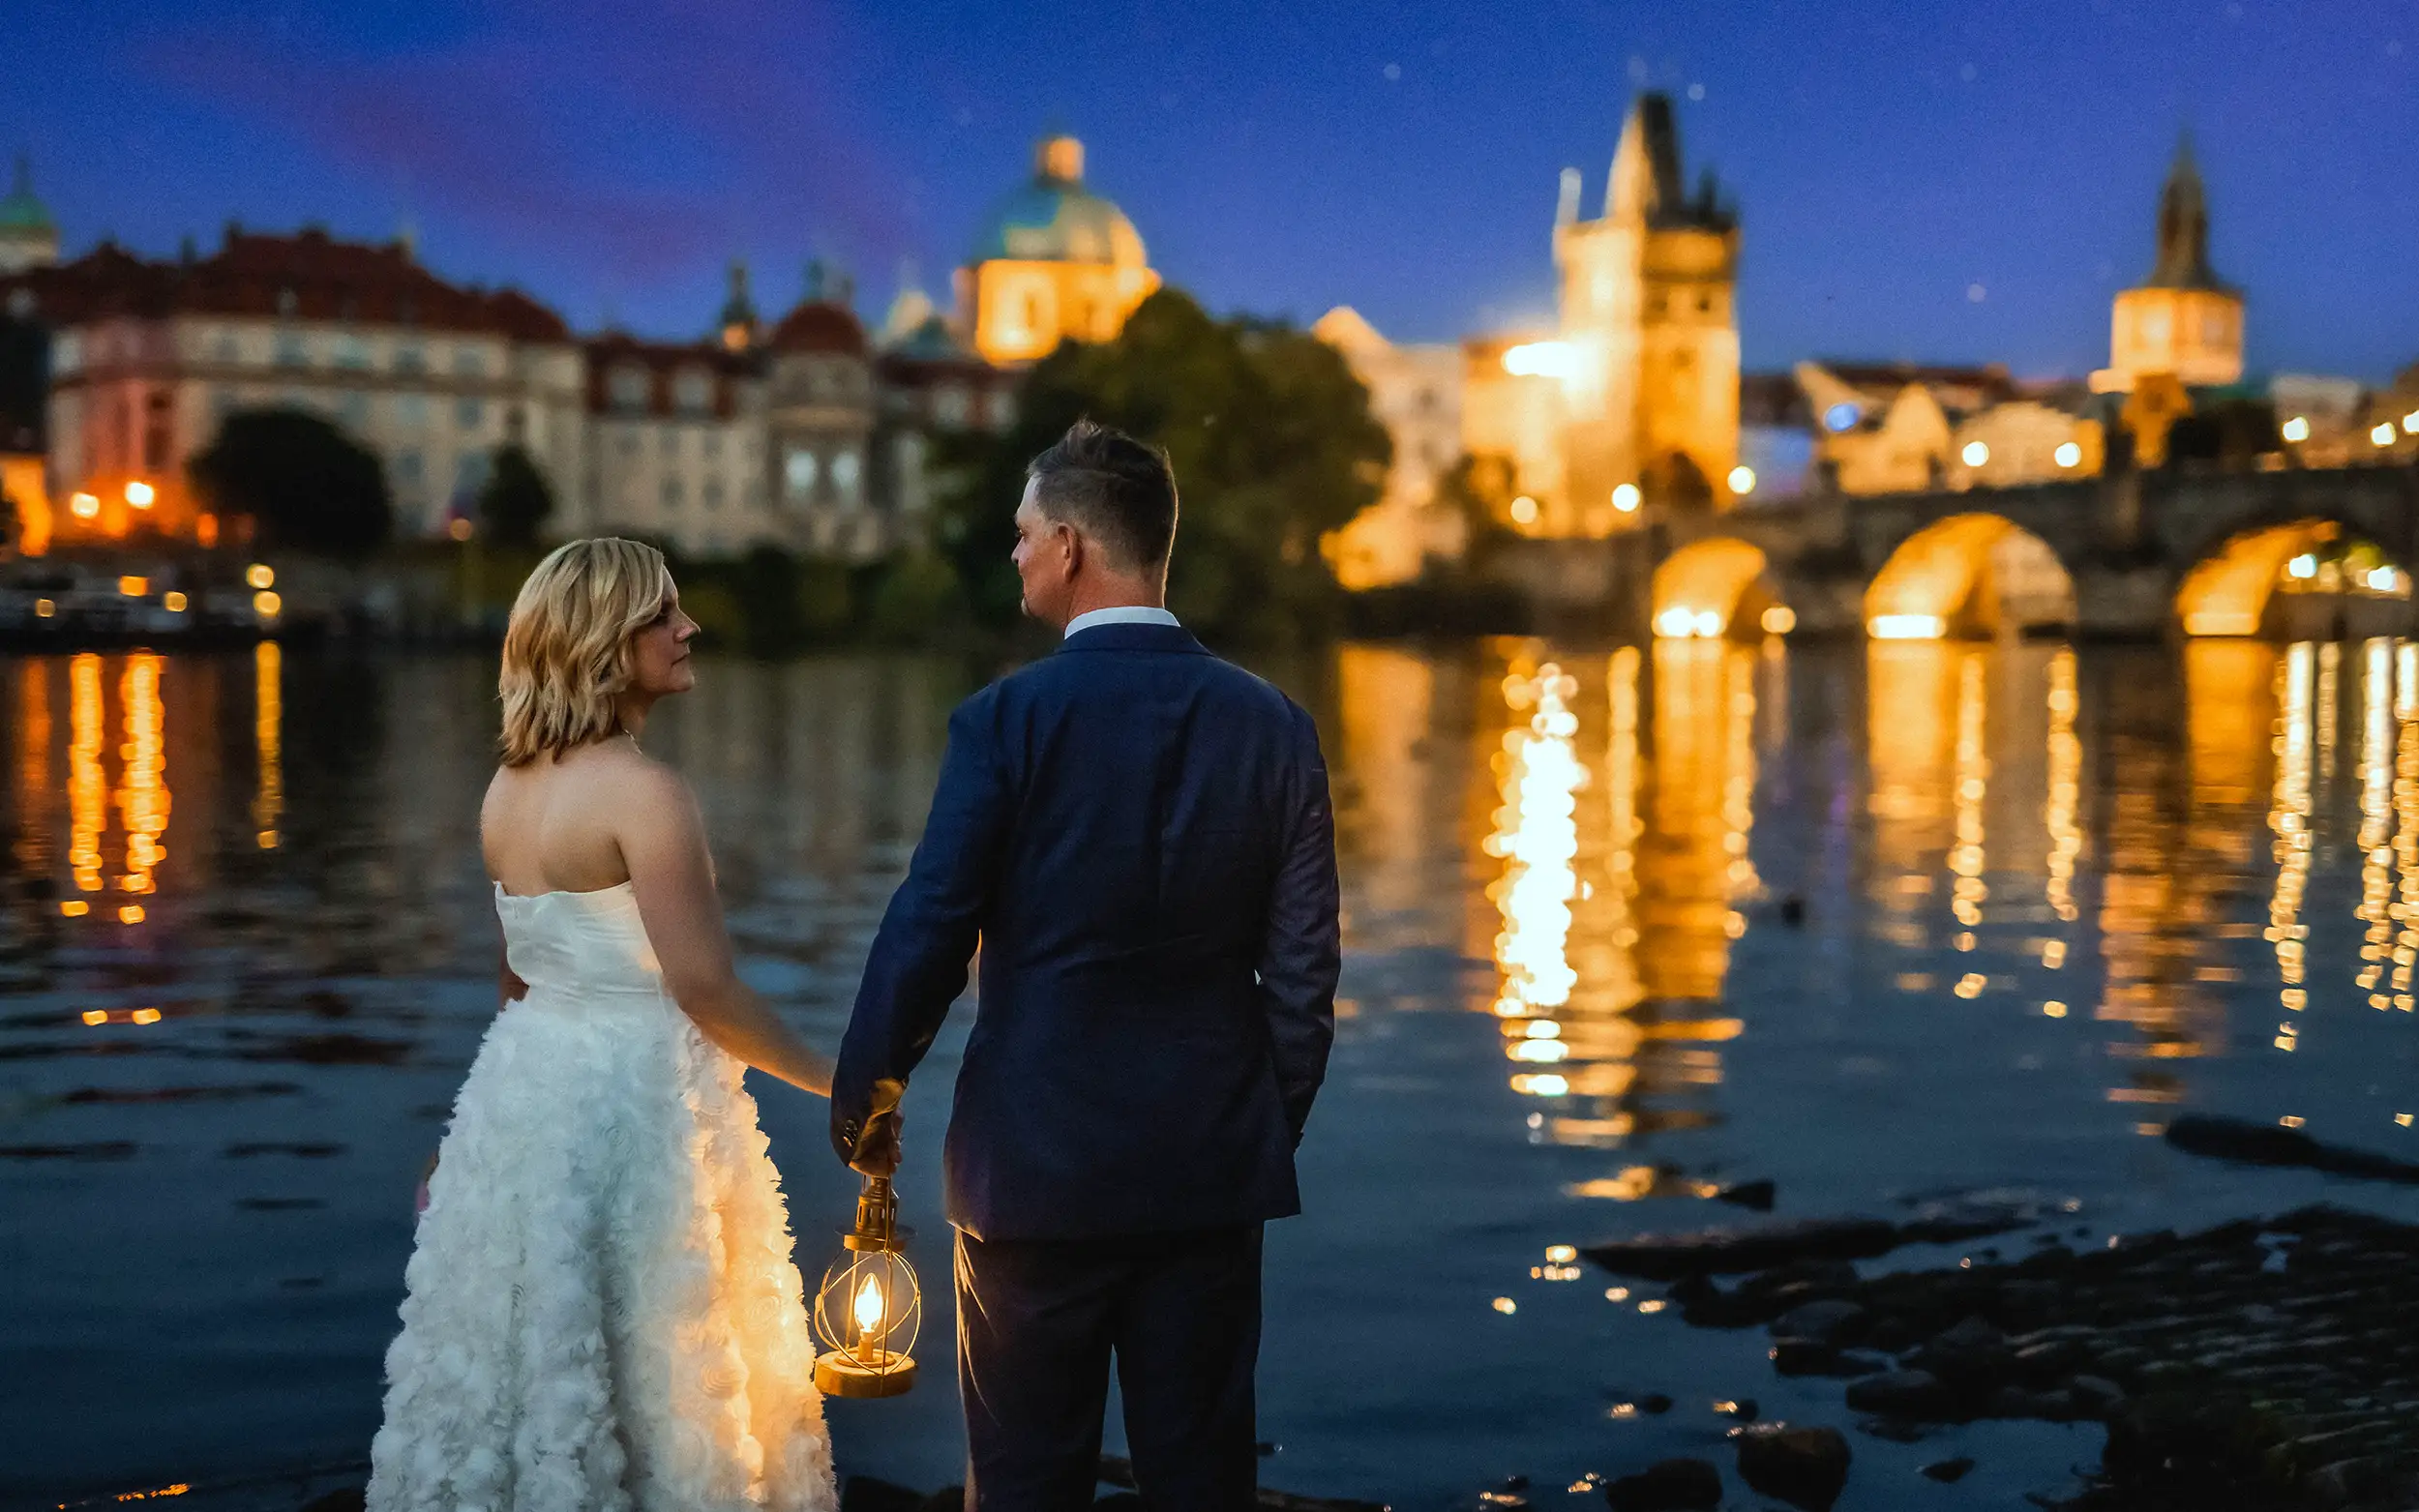 groom and bride navlavka prague at night with a lantern - wedding cameraman prague